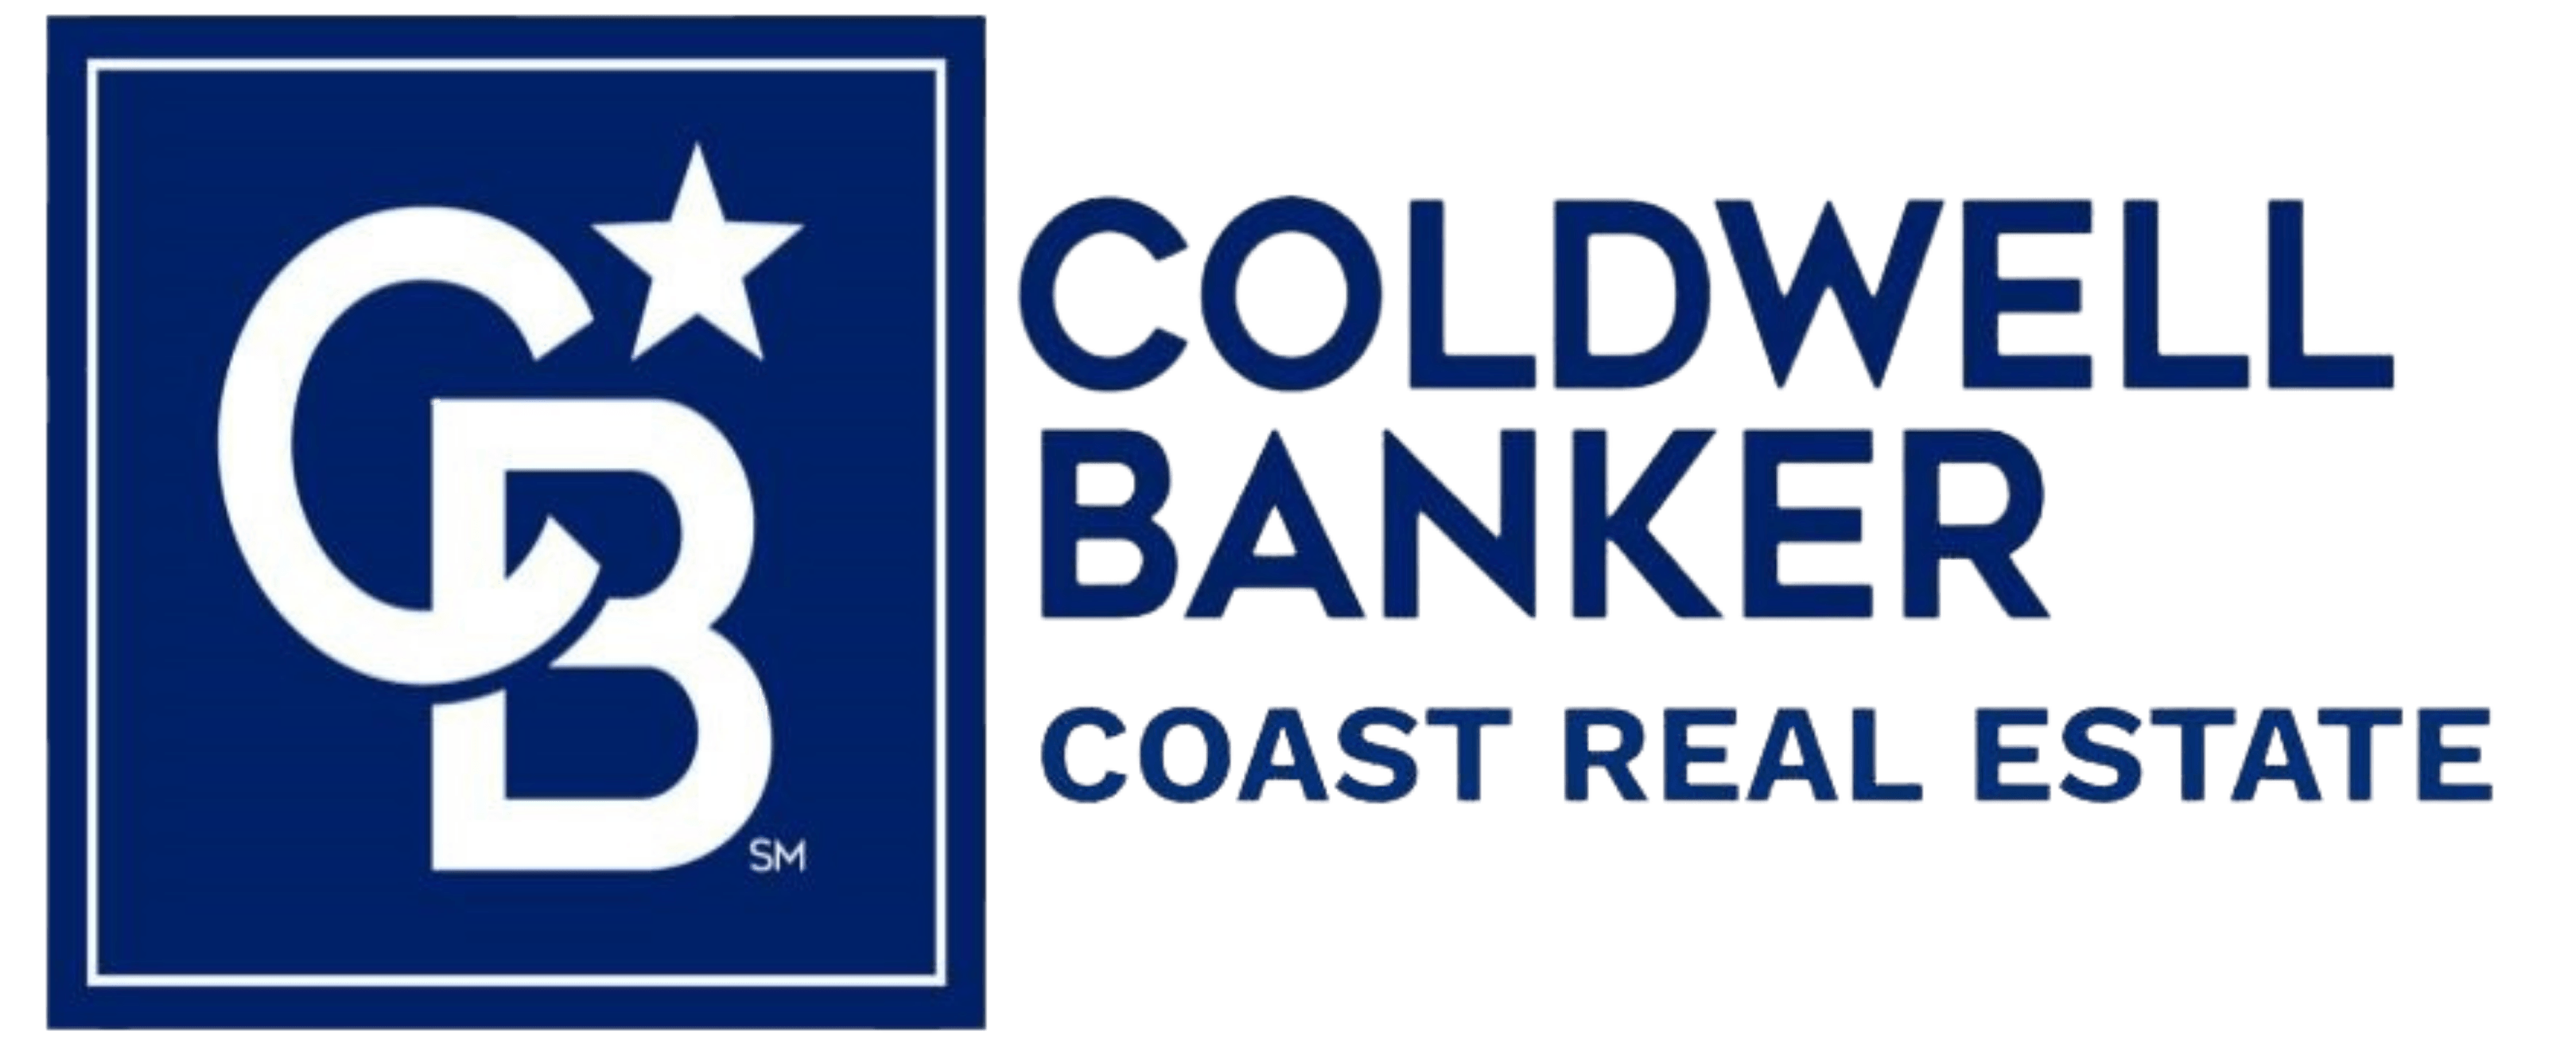 Coldwell Banker Coast Real Estate